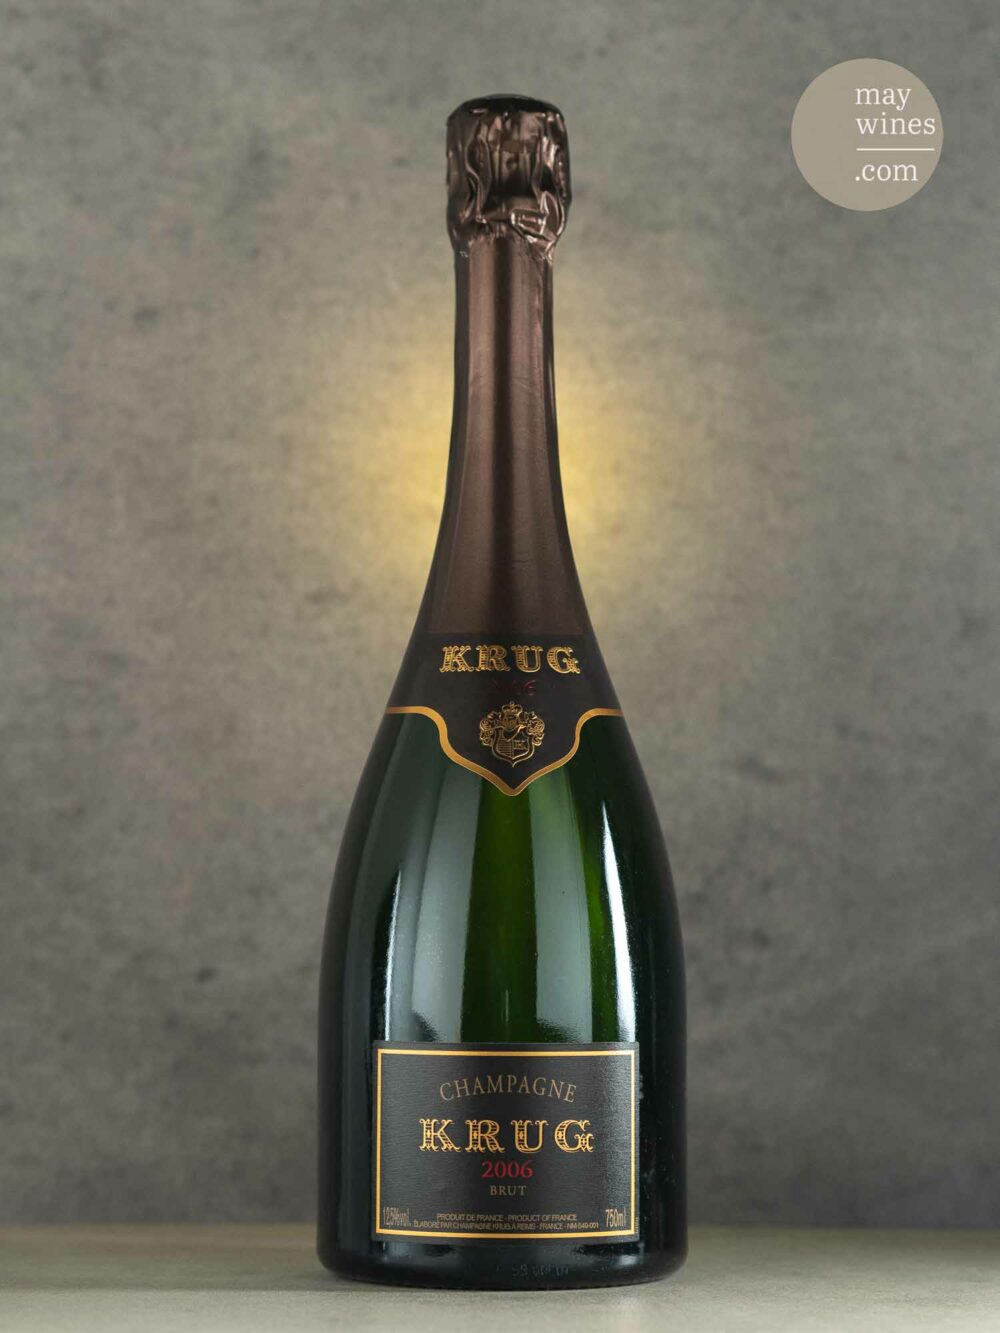 May Wines – Champagner – 2006 Vintage Brut - Krug